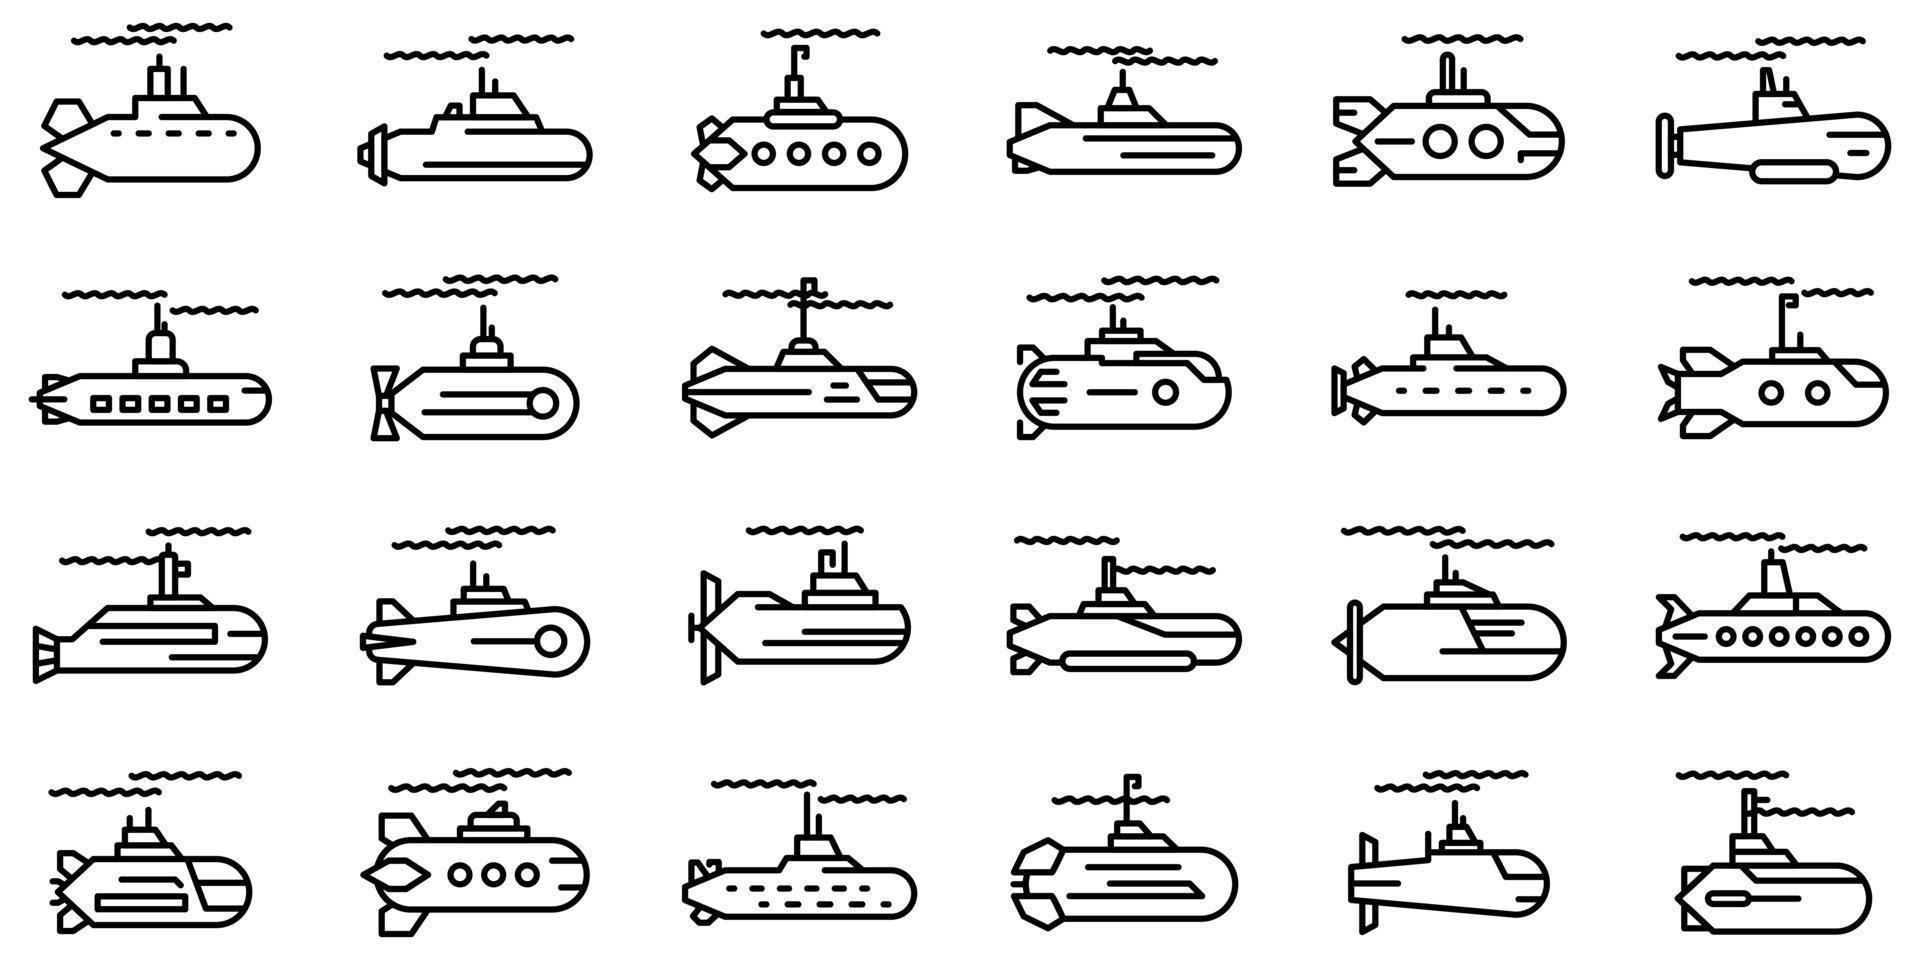 U-Boot-Symbole gesetzt, Umrissstil vektor